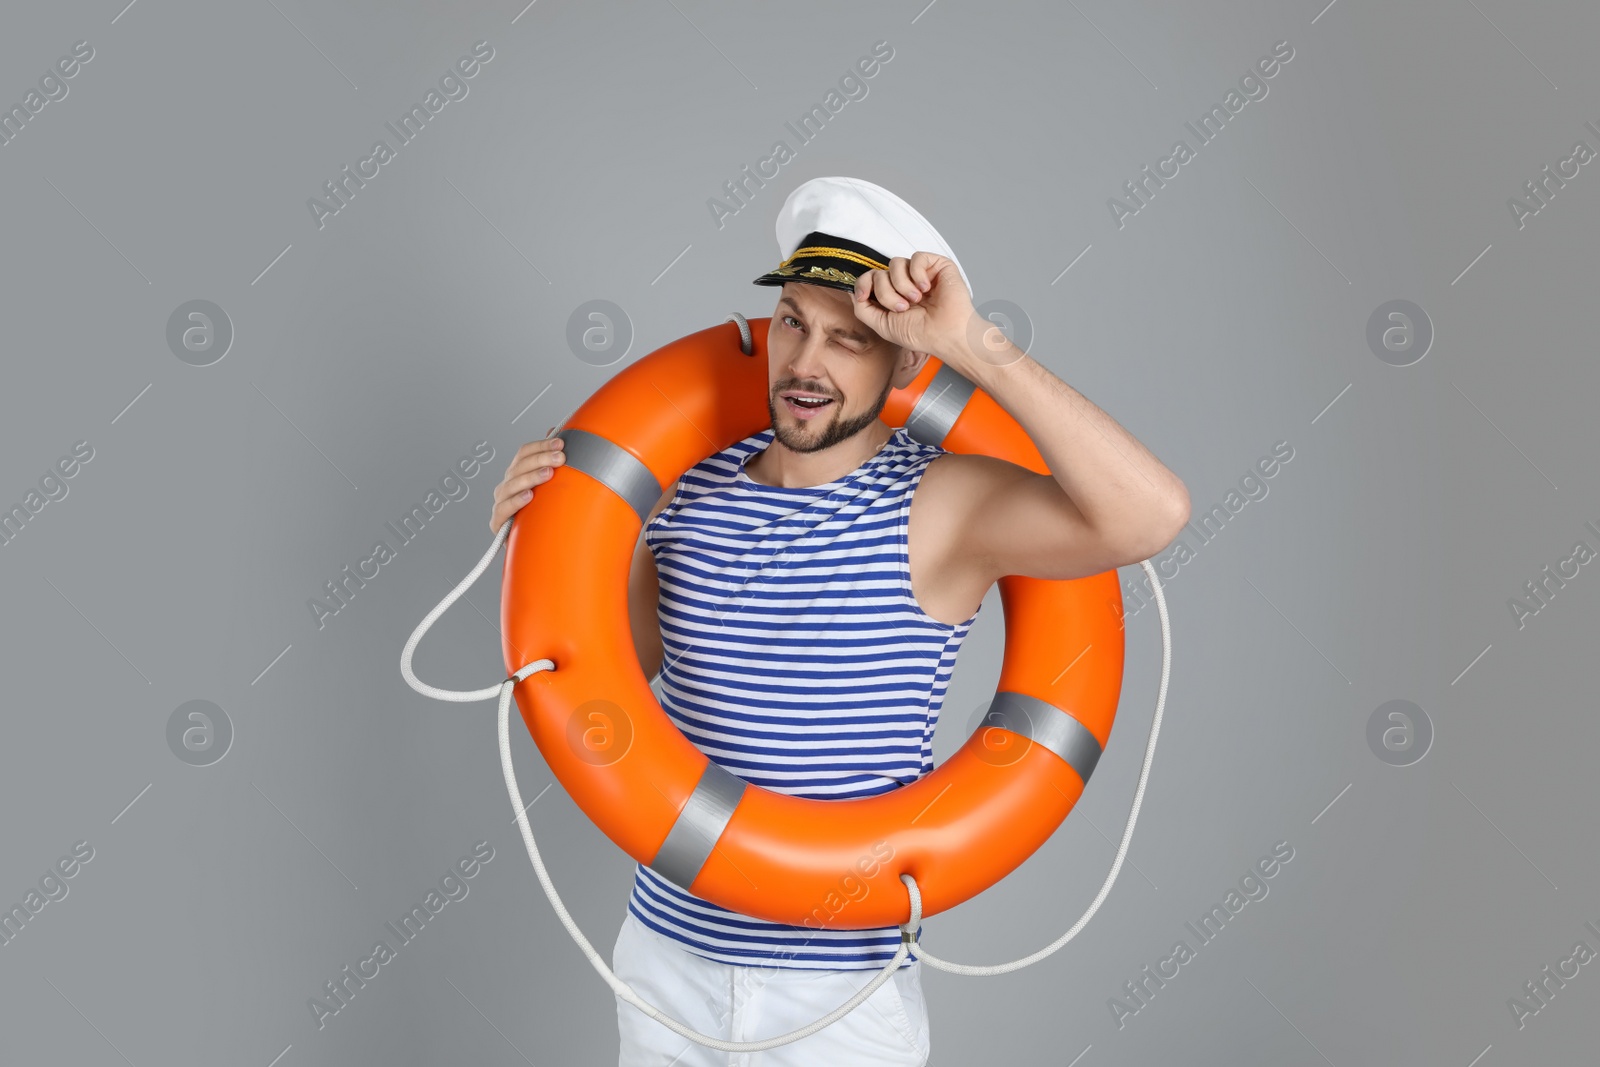 Photo of Sailor with orange ring buoy on grey background